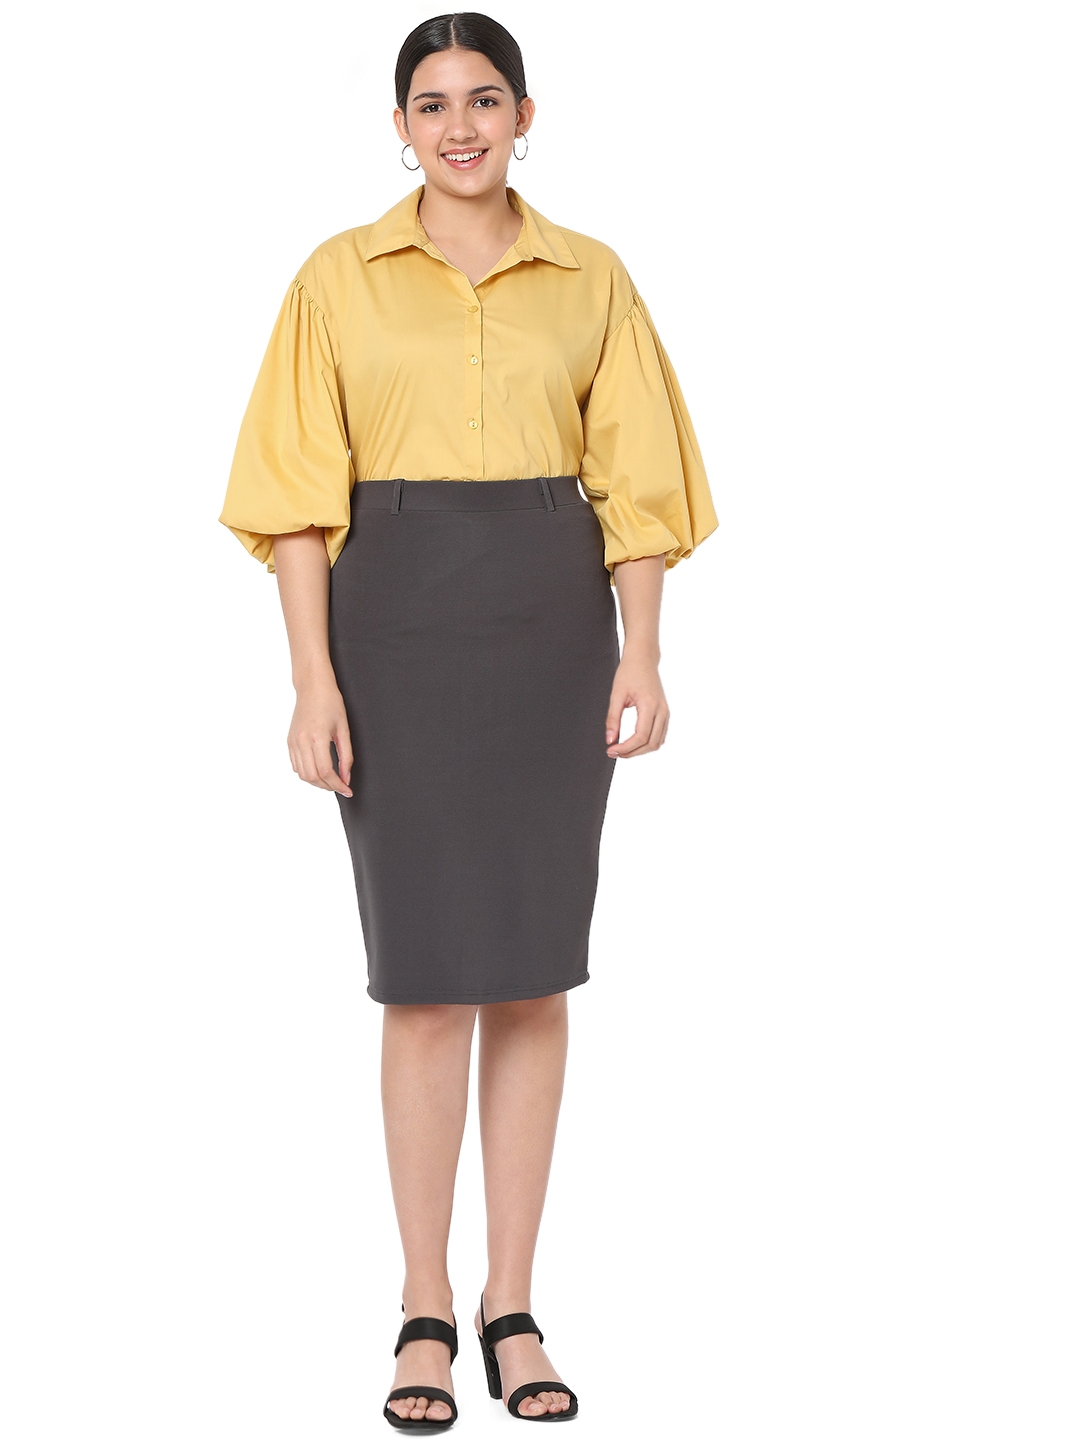 Smarty Pants | Smarty Pants women's cotton lycra grey color pencil skirt. 5